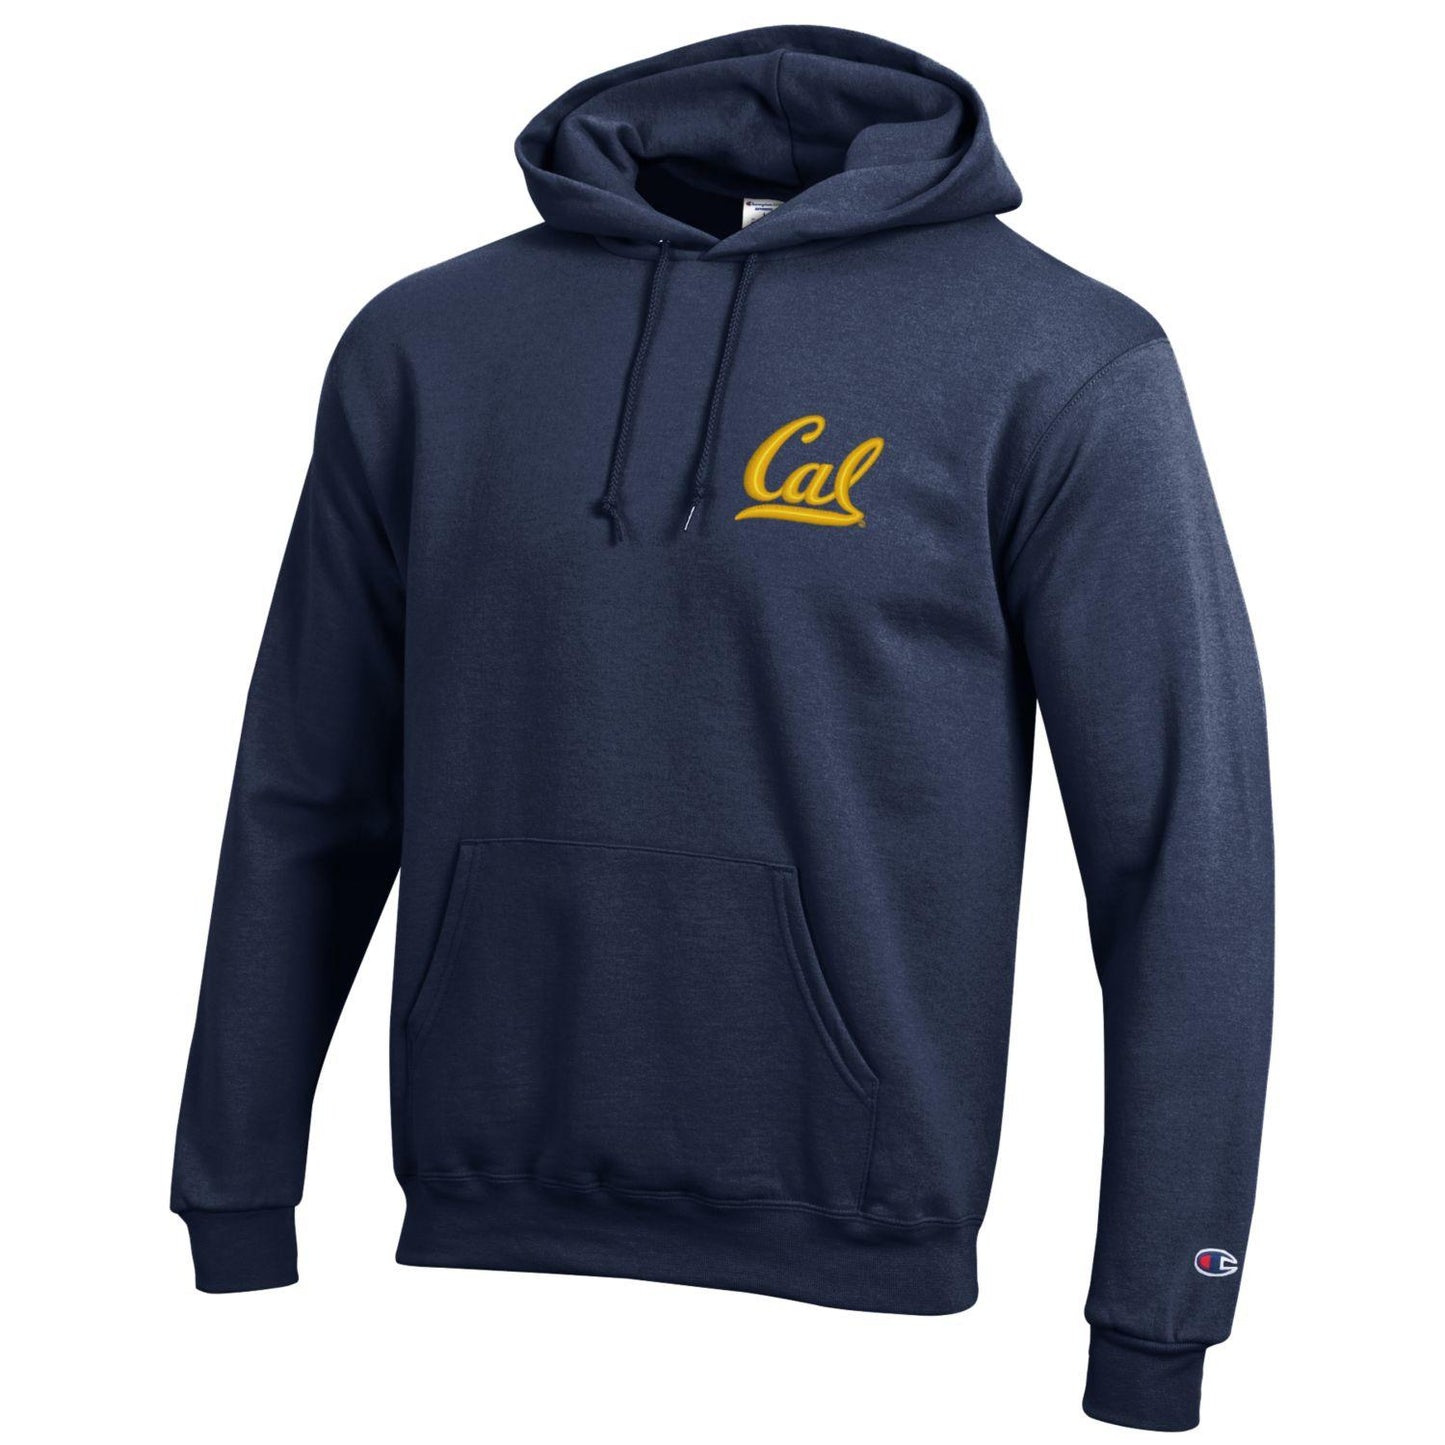 University of California Berkeley Cal embroidered Men's Champion hoodie sweatshirt-NAVY-Shop College Wear